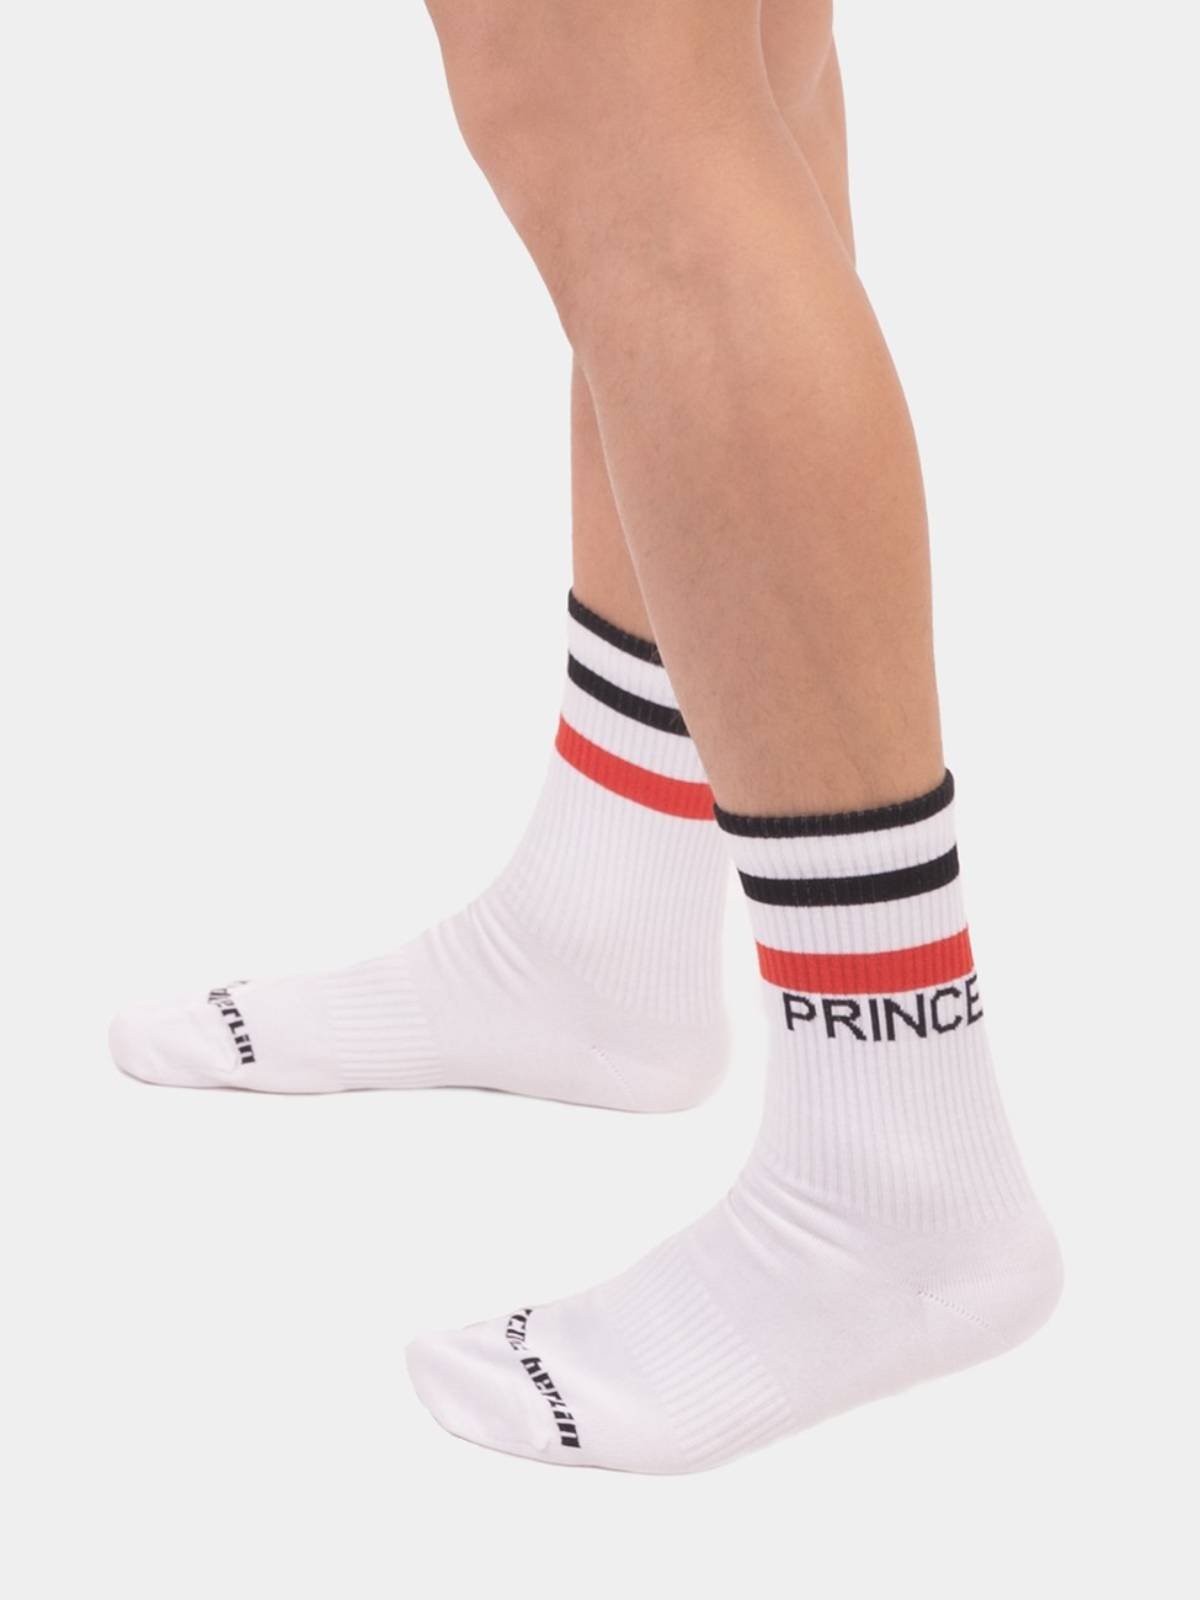 Urban Socks Prince